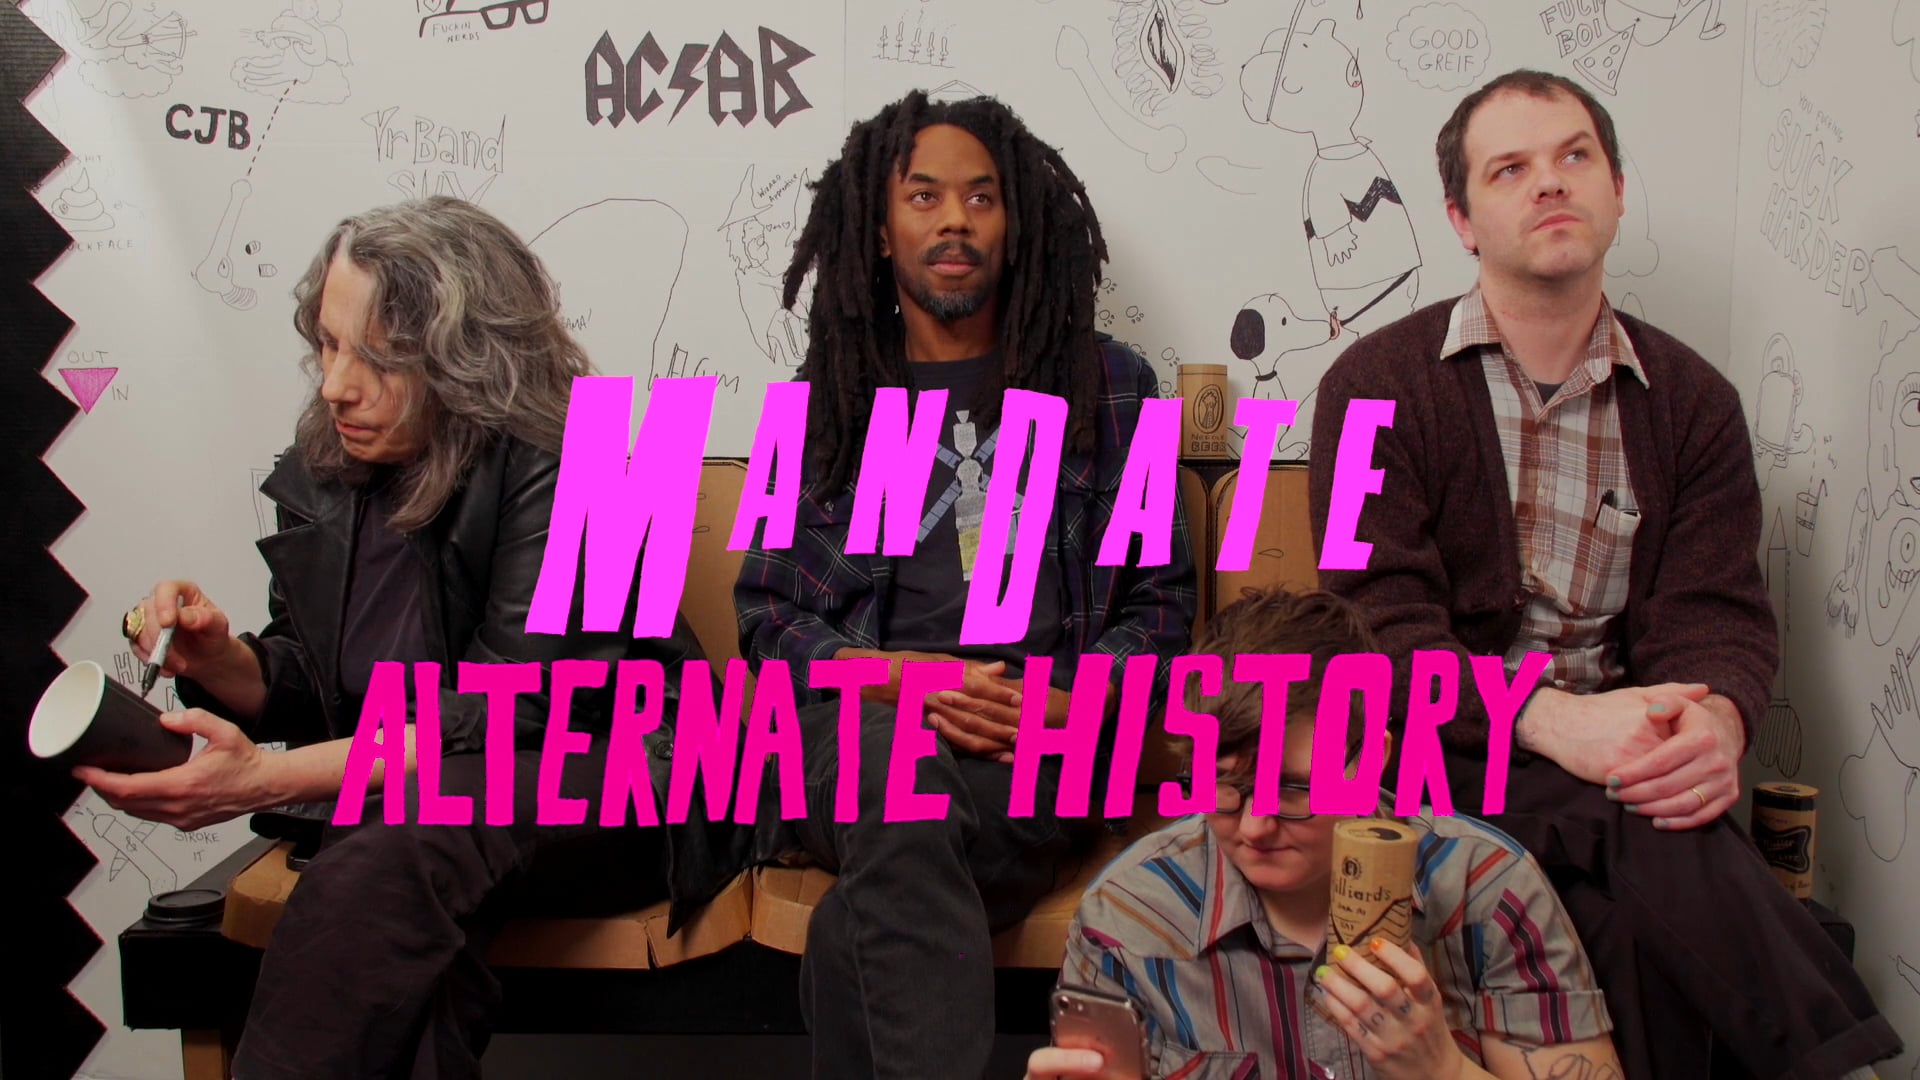 ManDate "Alternate History" Official Video